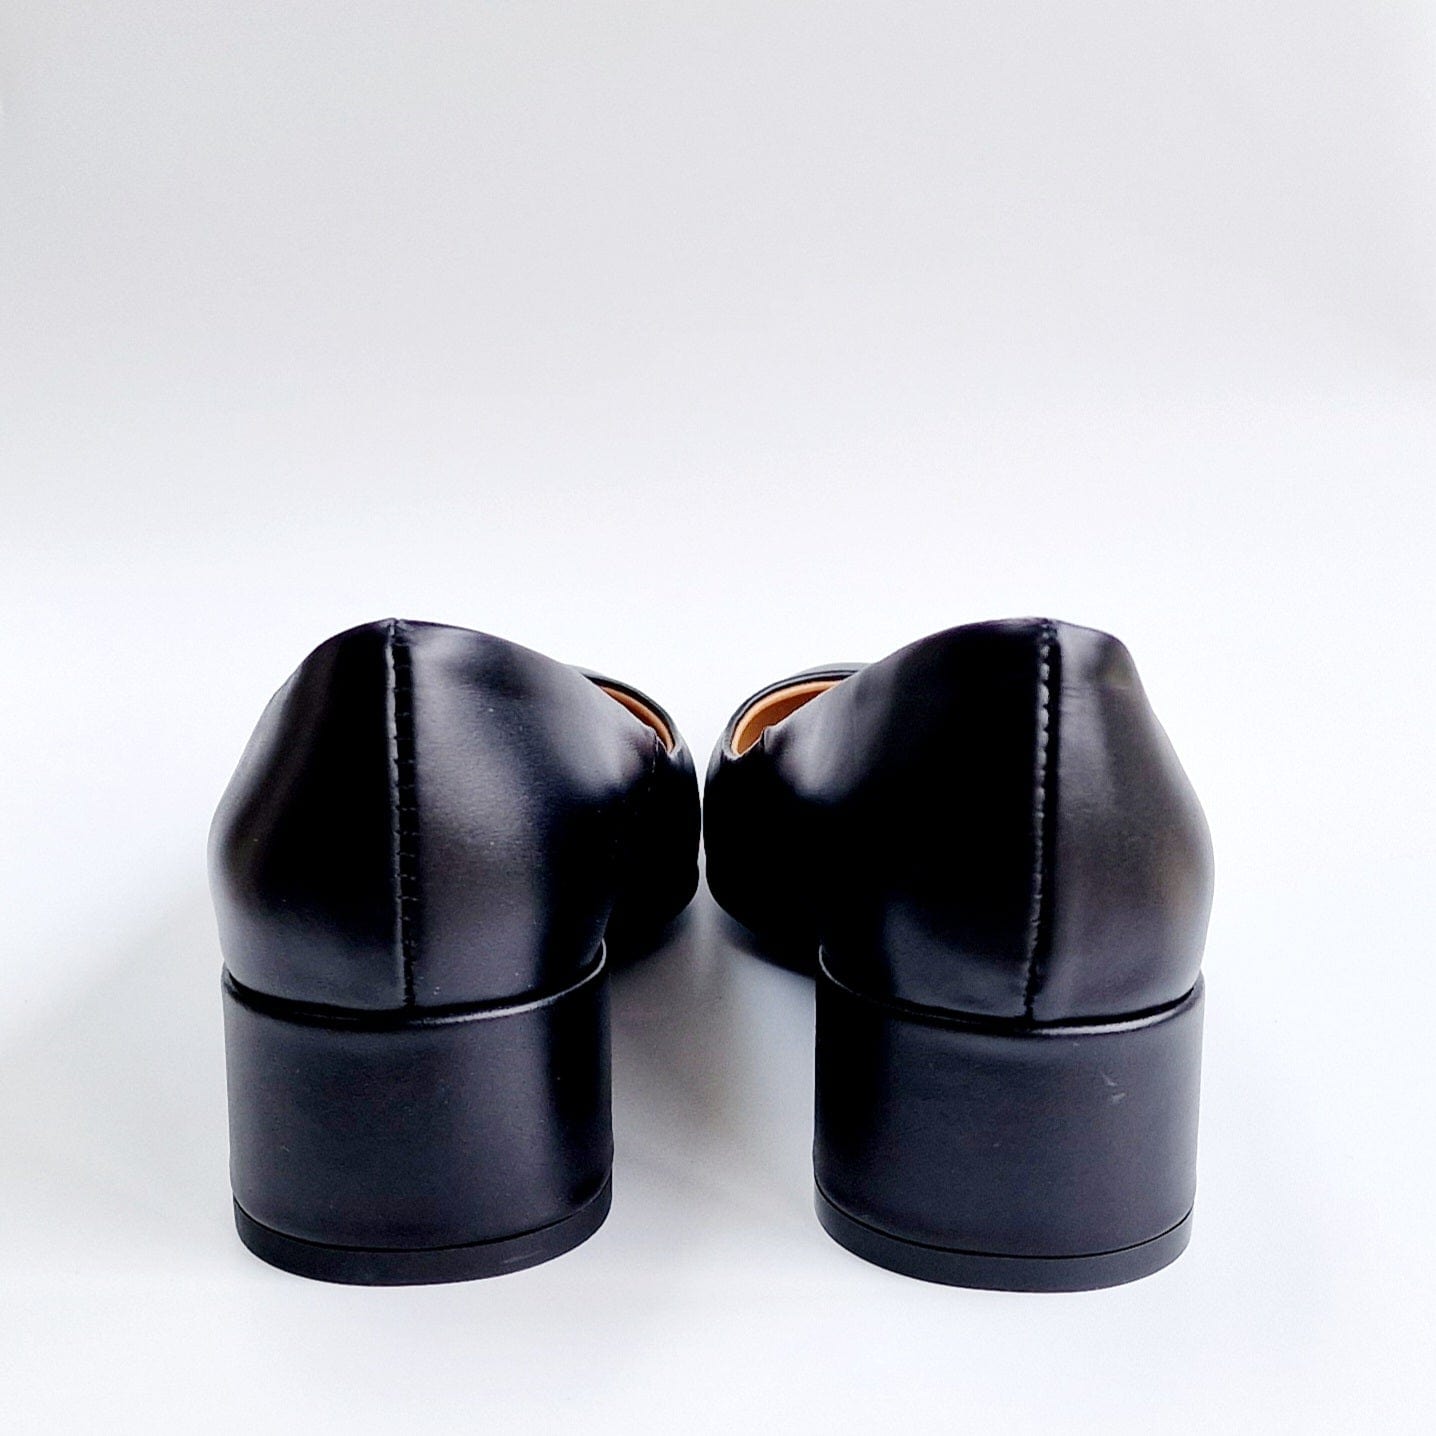 Kitten heel round toe ballerina pumps in black leather